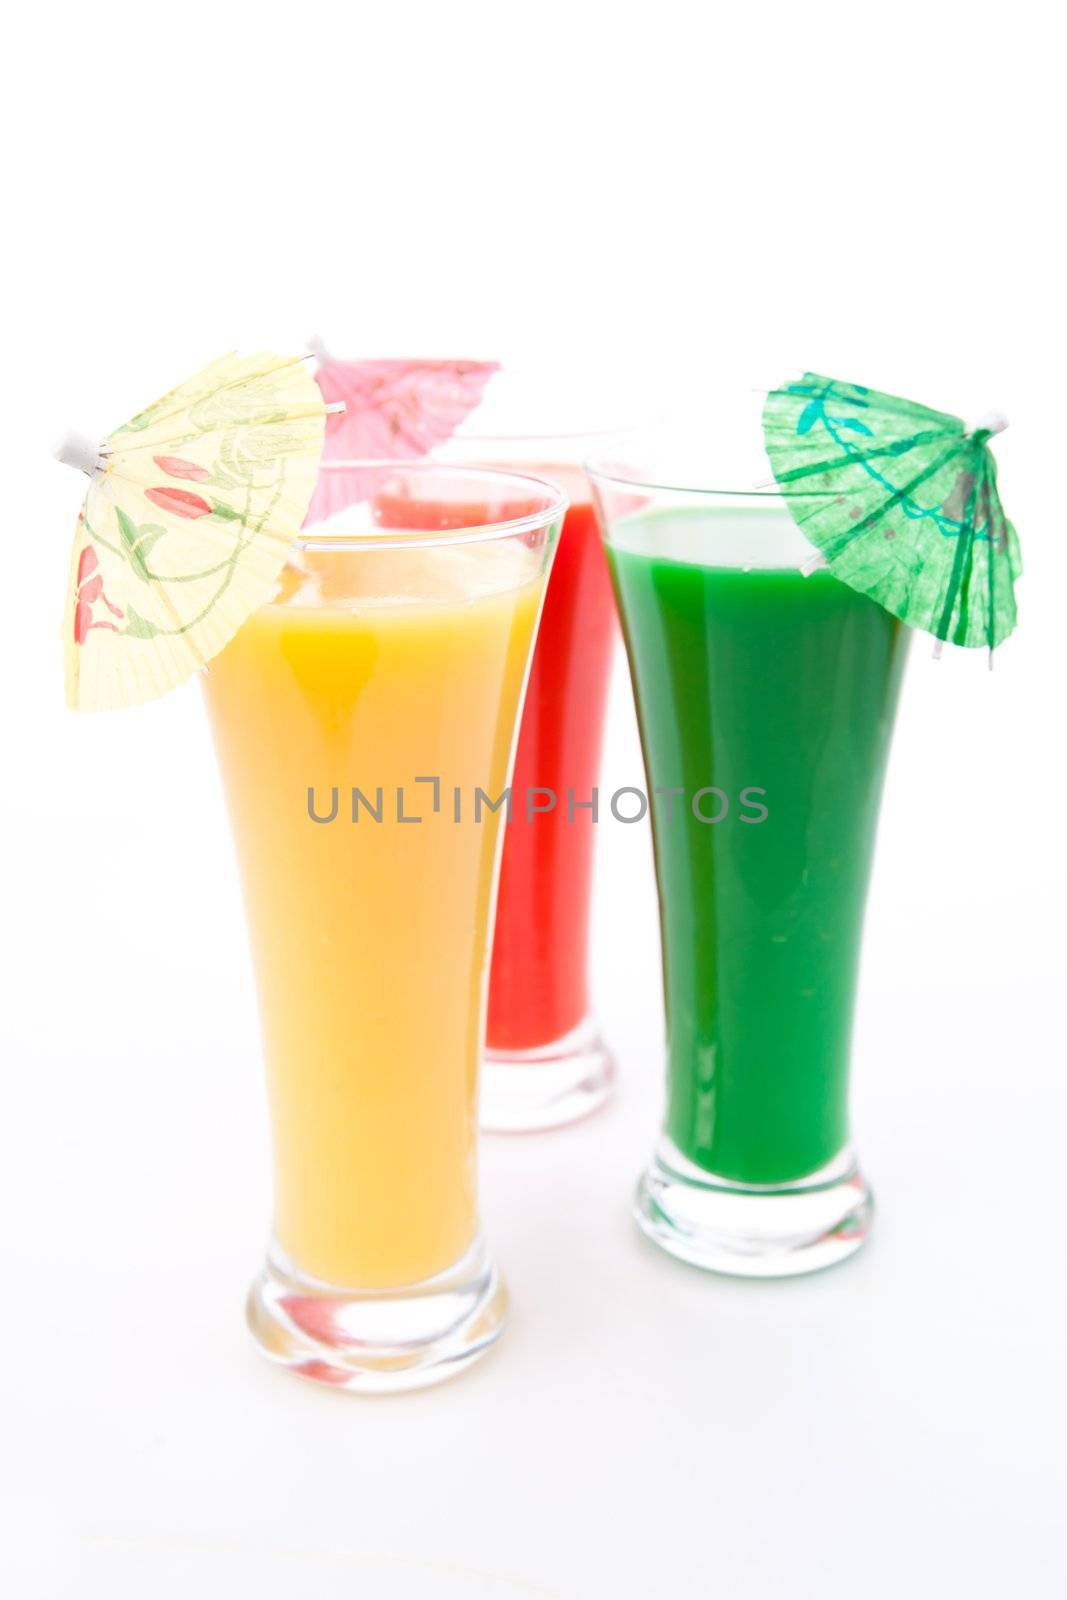 Cocktail umbrella in three glasses by Wavebreakmedia